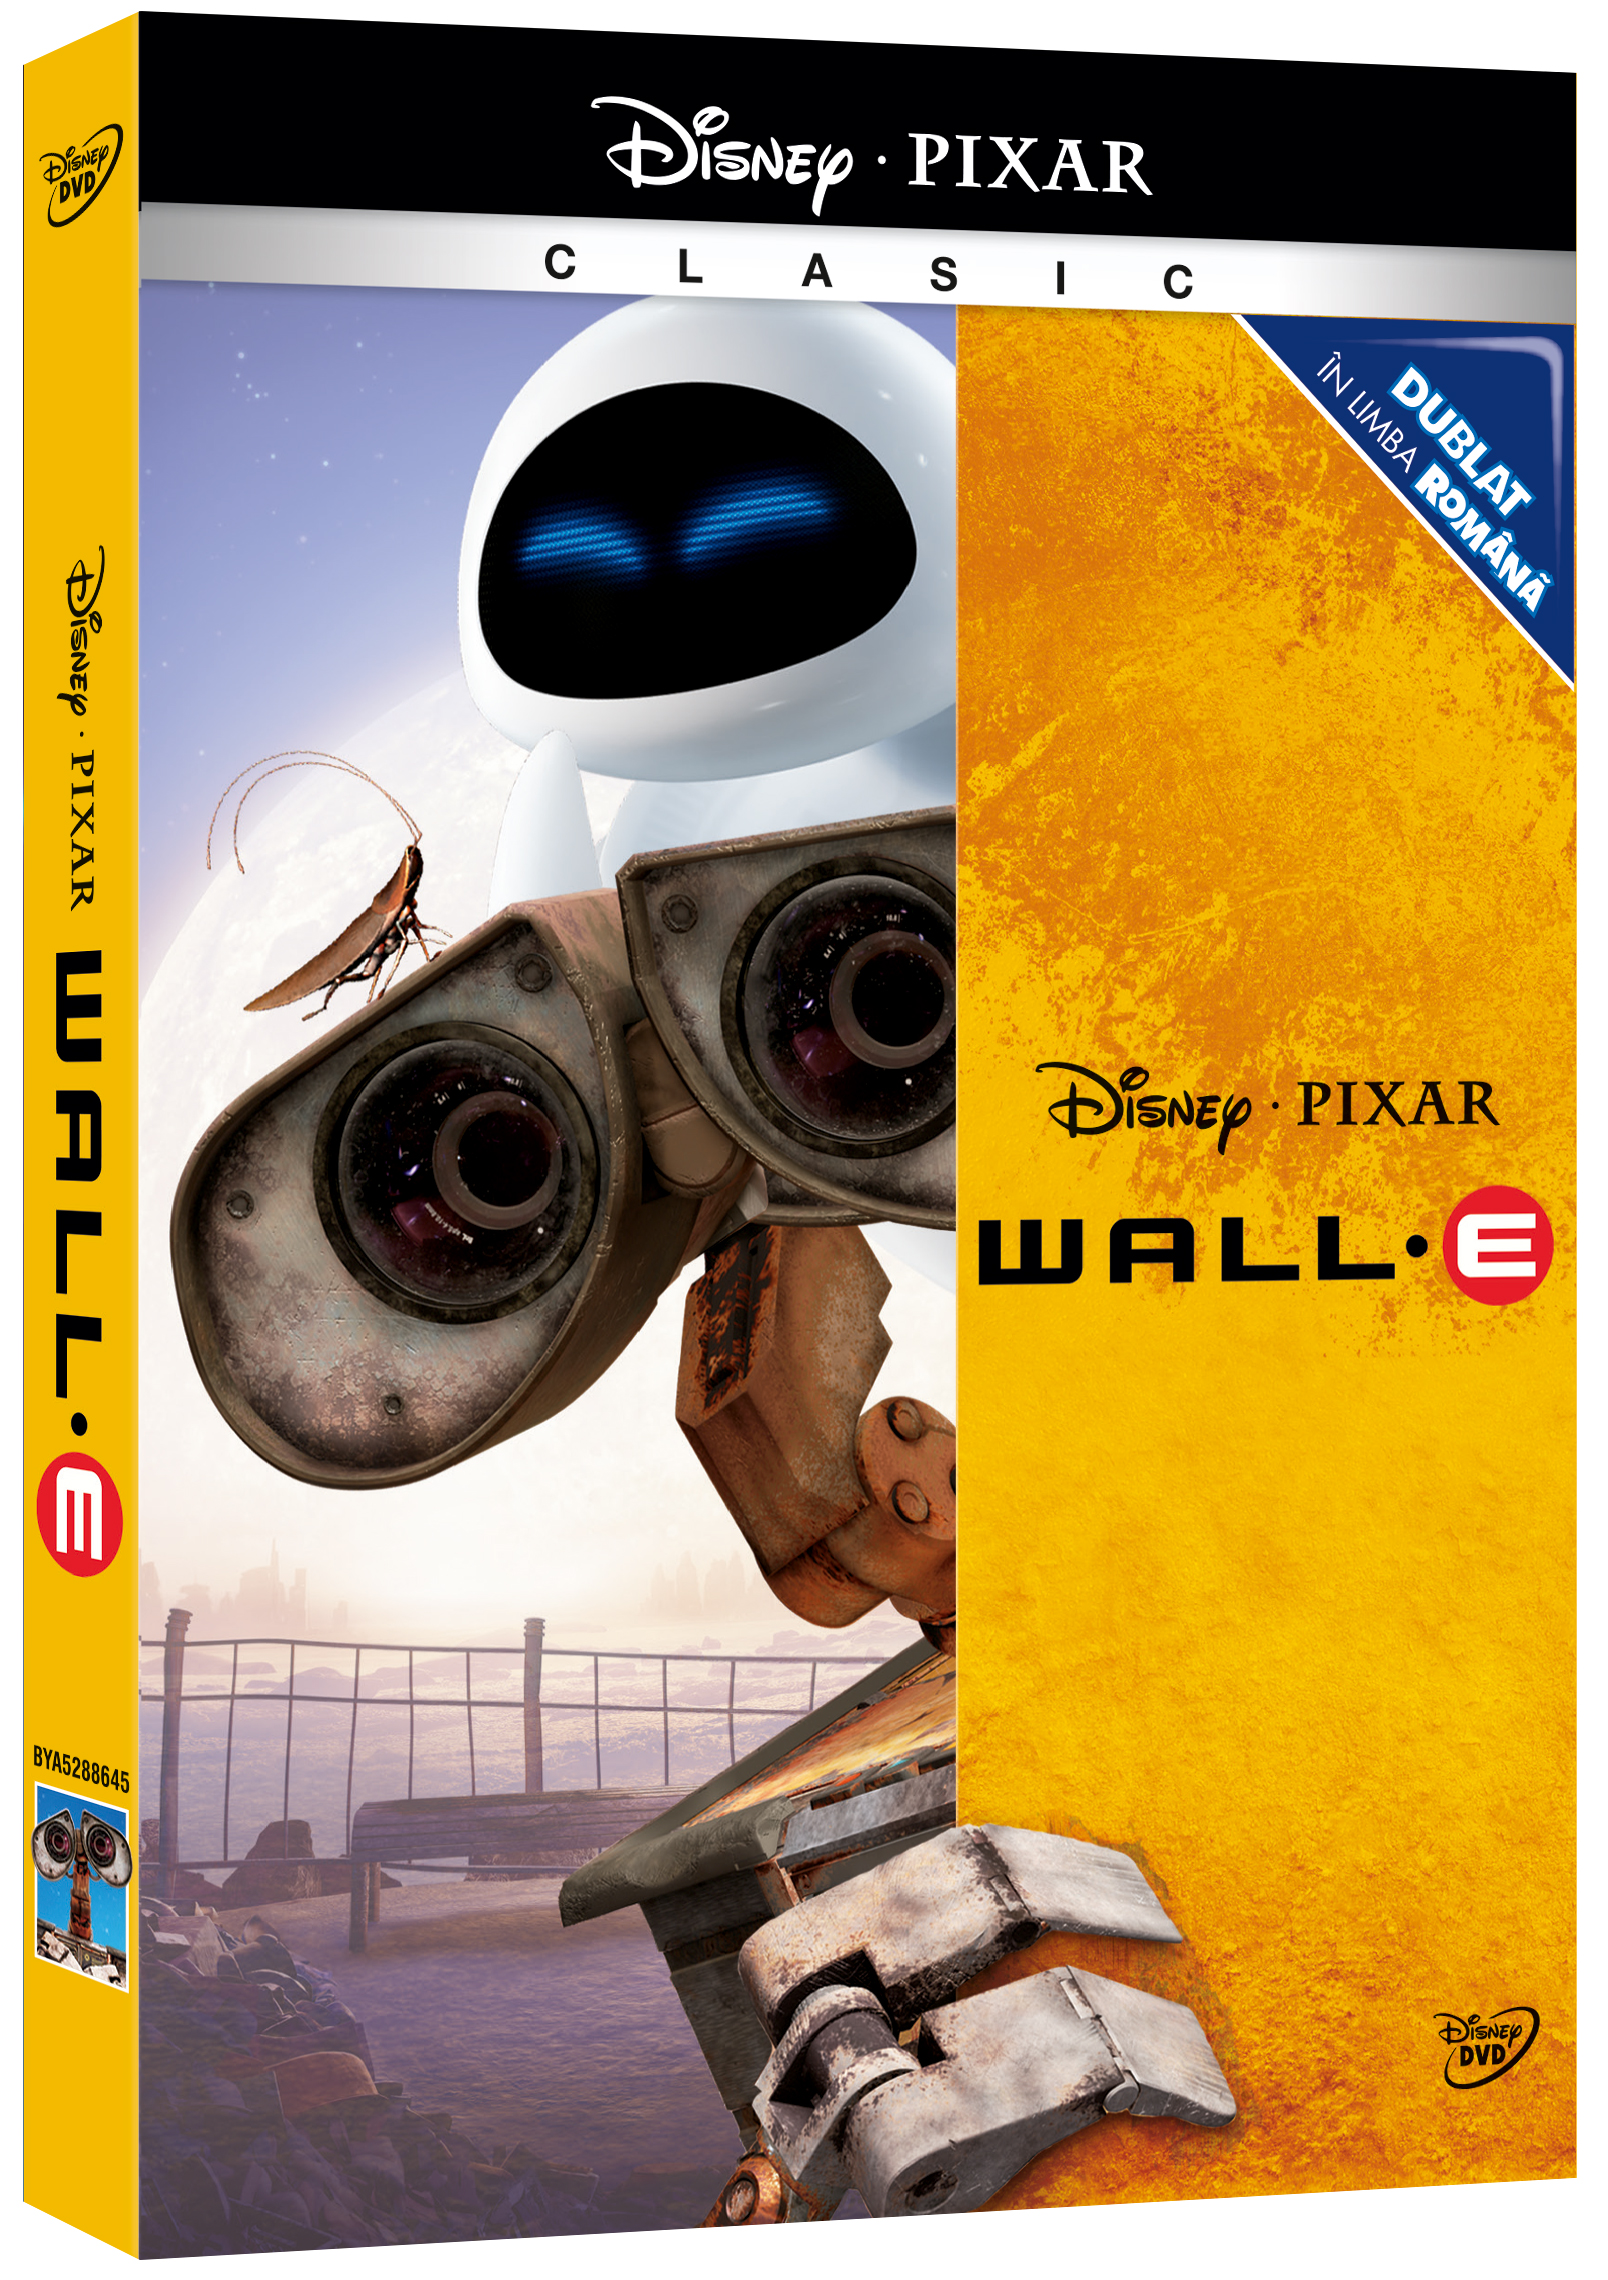 WALL-E / WALL-E | Andrew Stanton image7